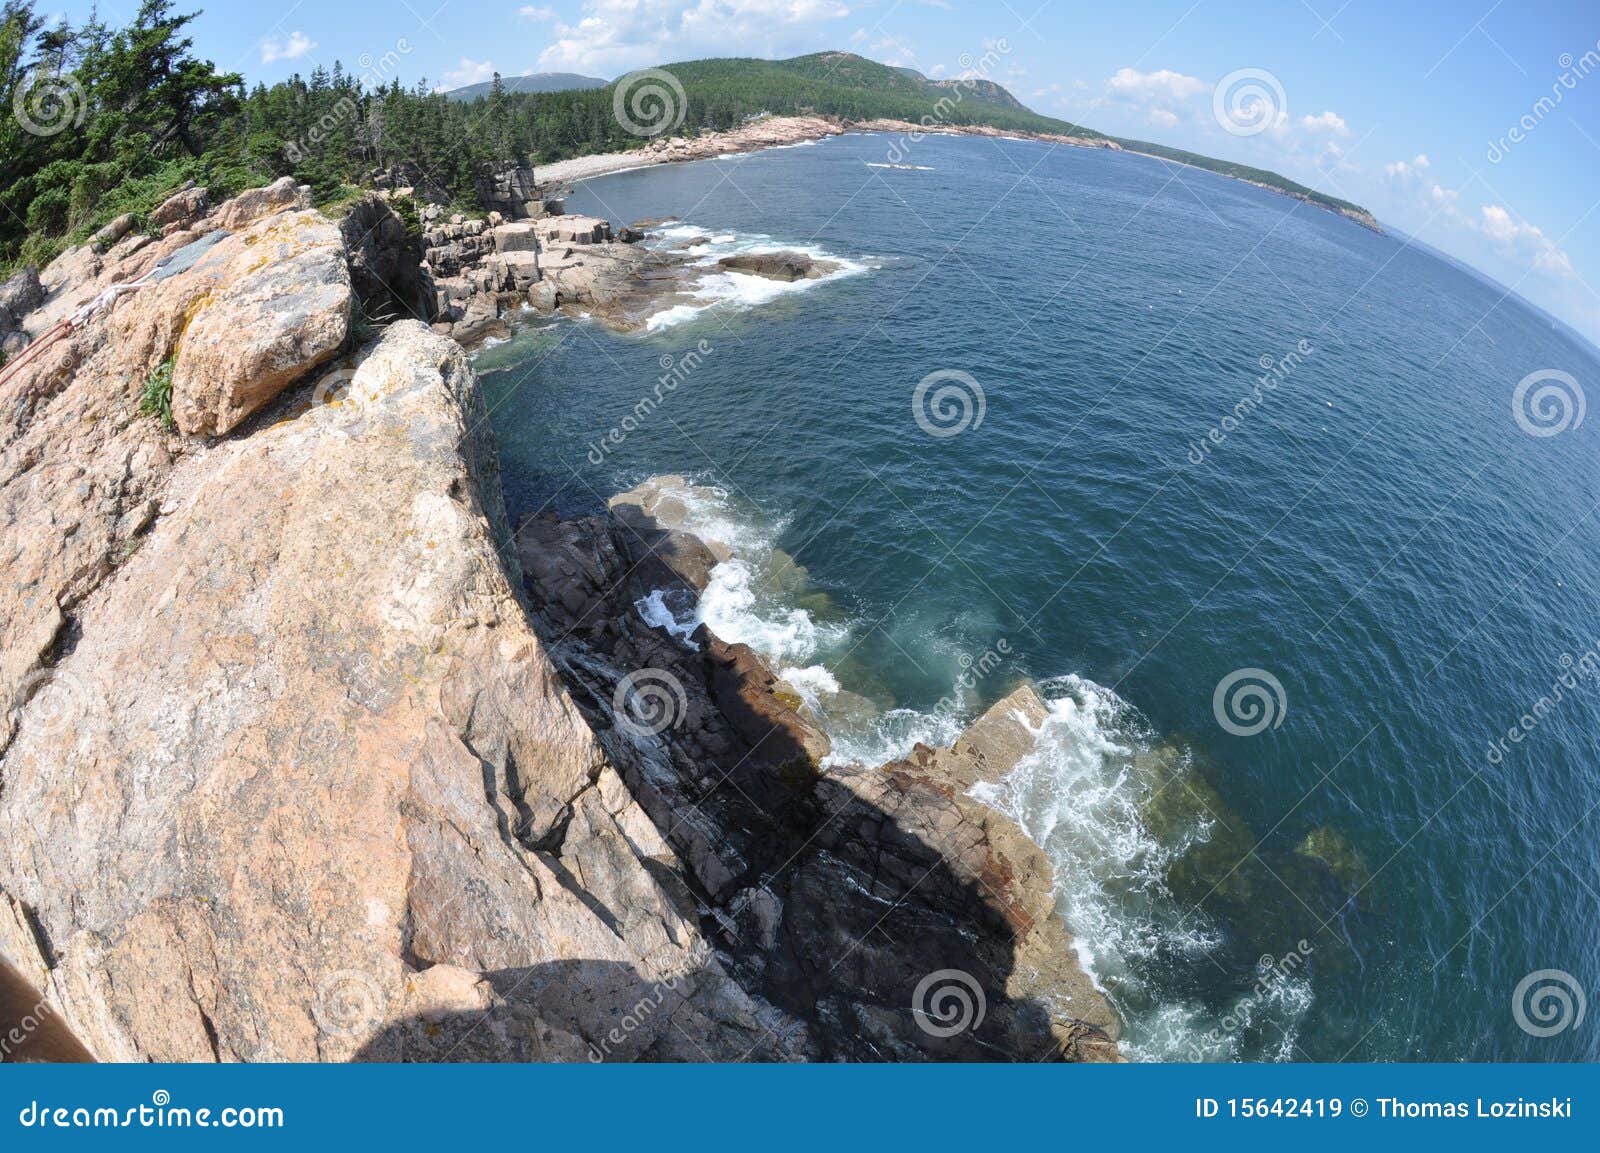 fisheye cliffs